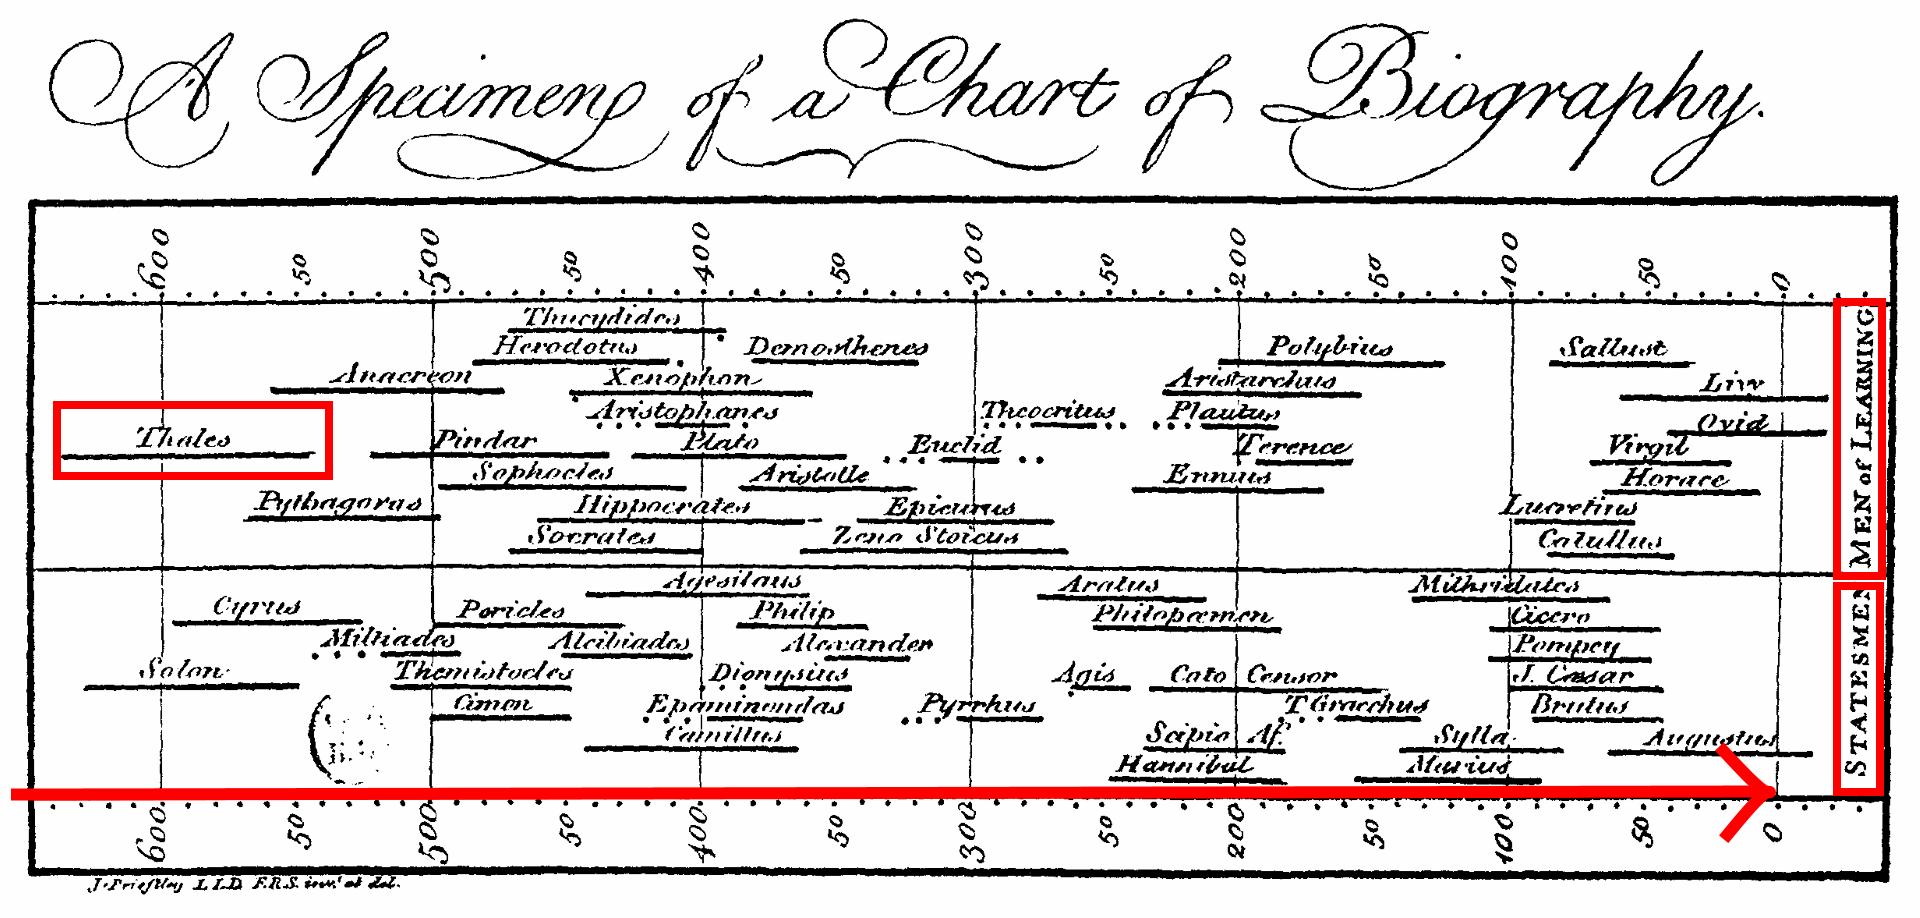 Joseph Priestley's "Chart of Biography" (PD, 1765)